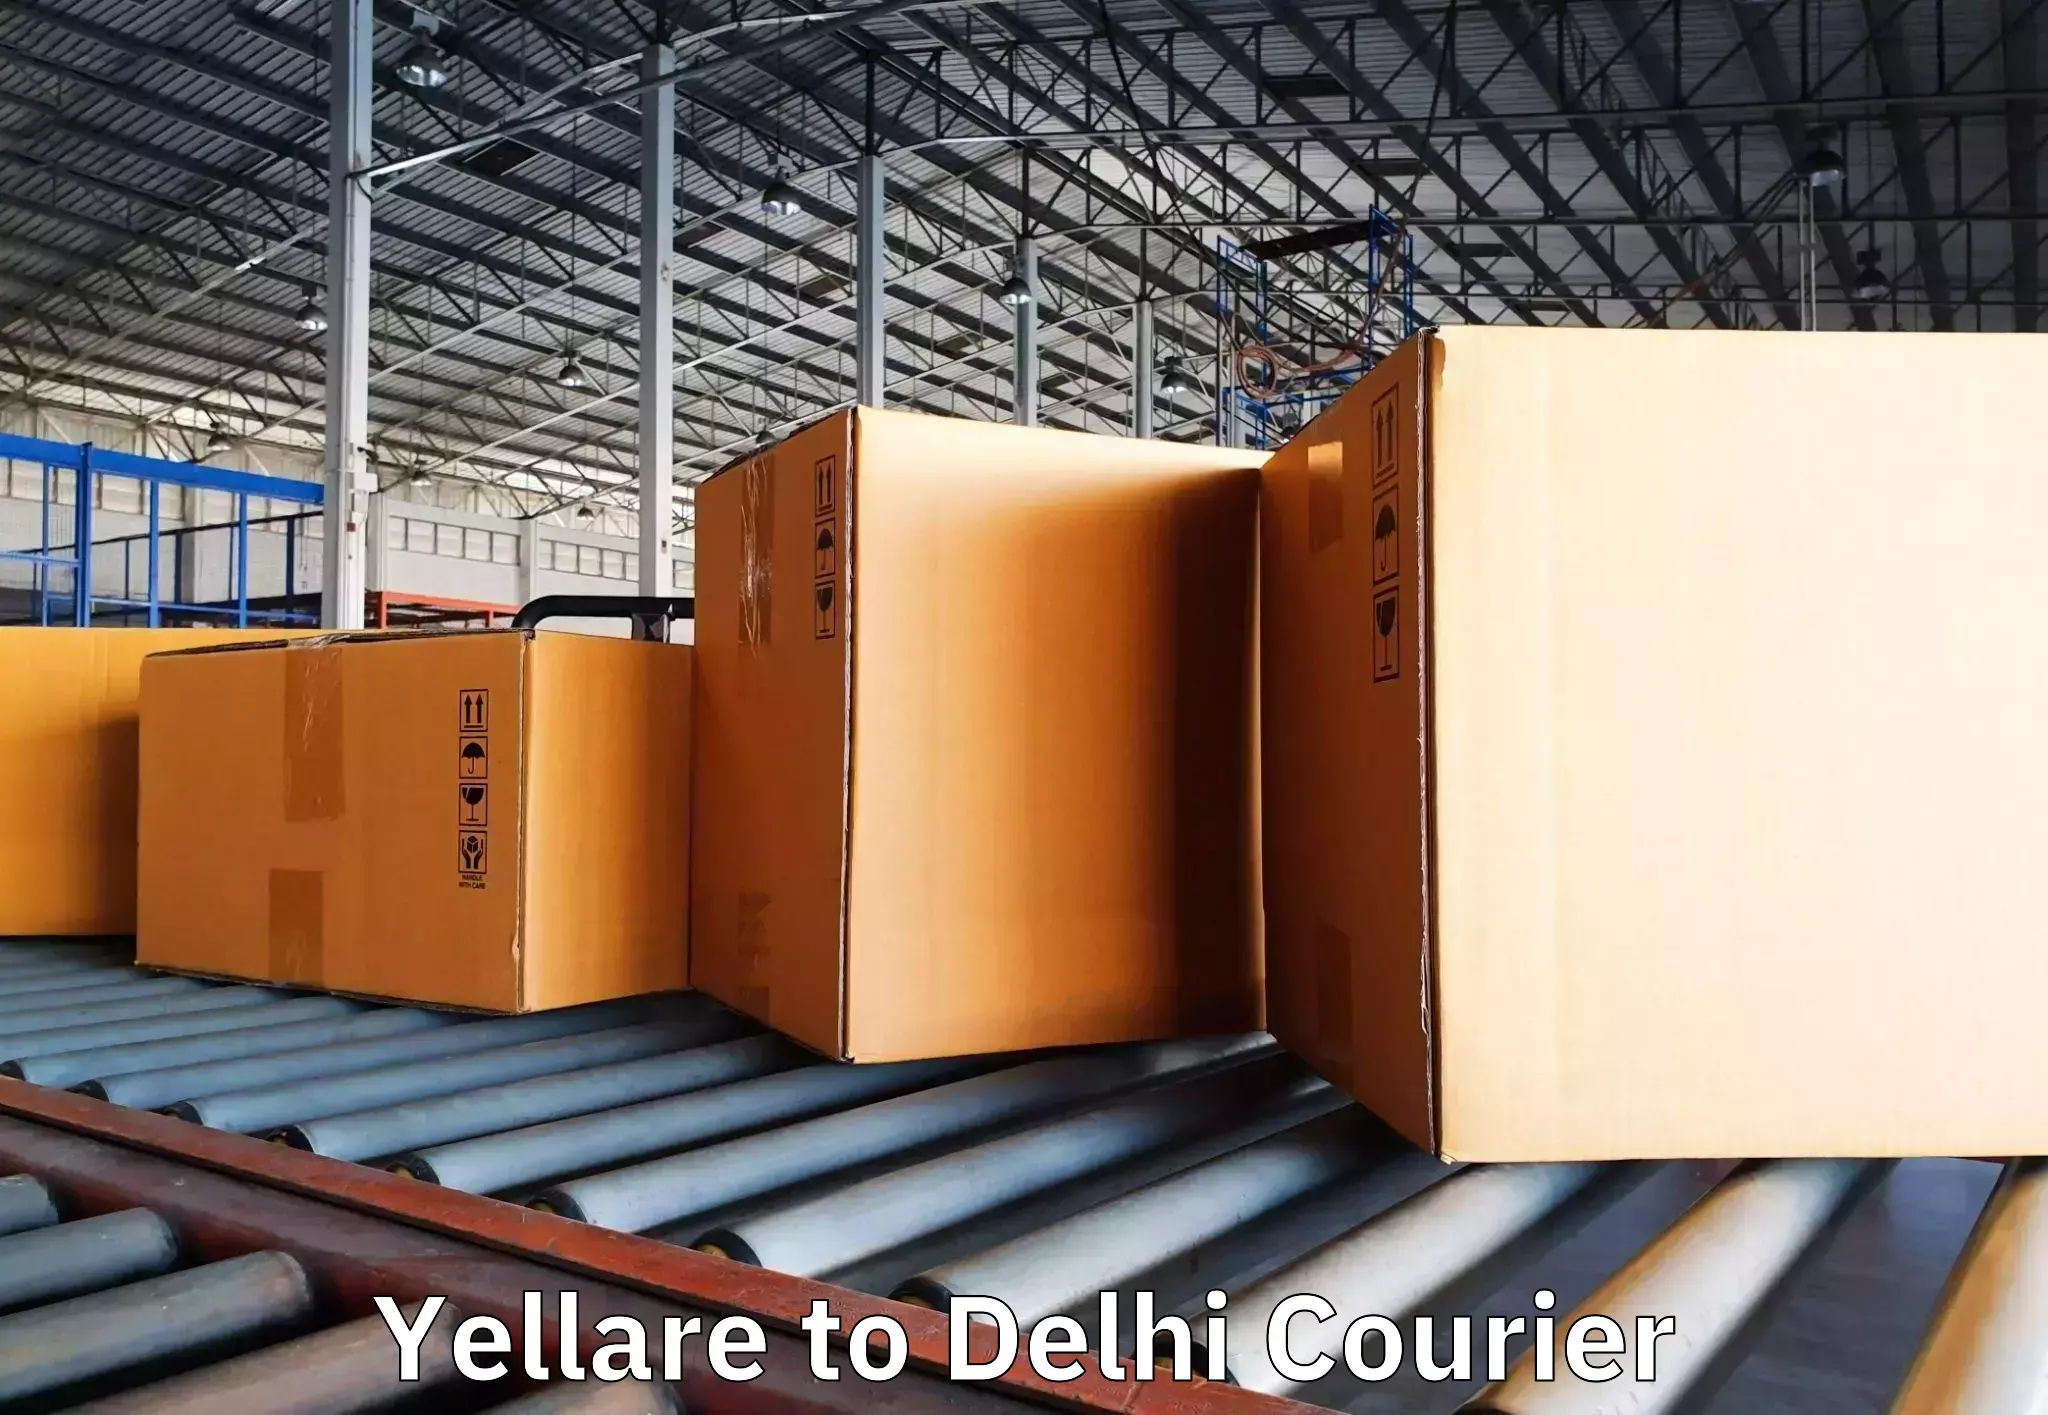 Efficient moving company Yellare to East Delhi